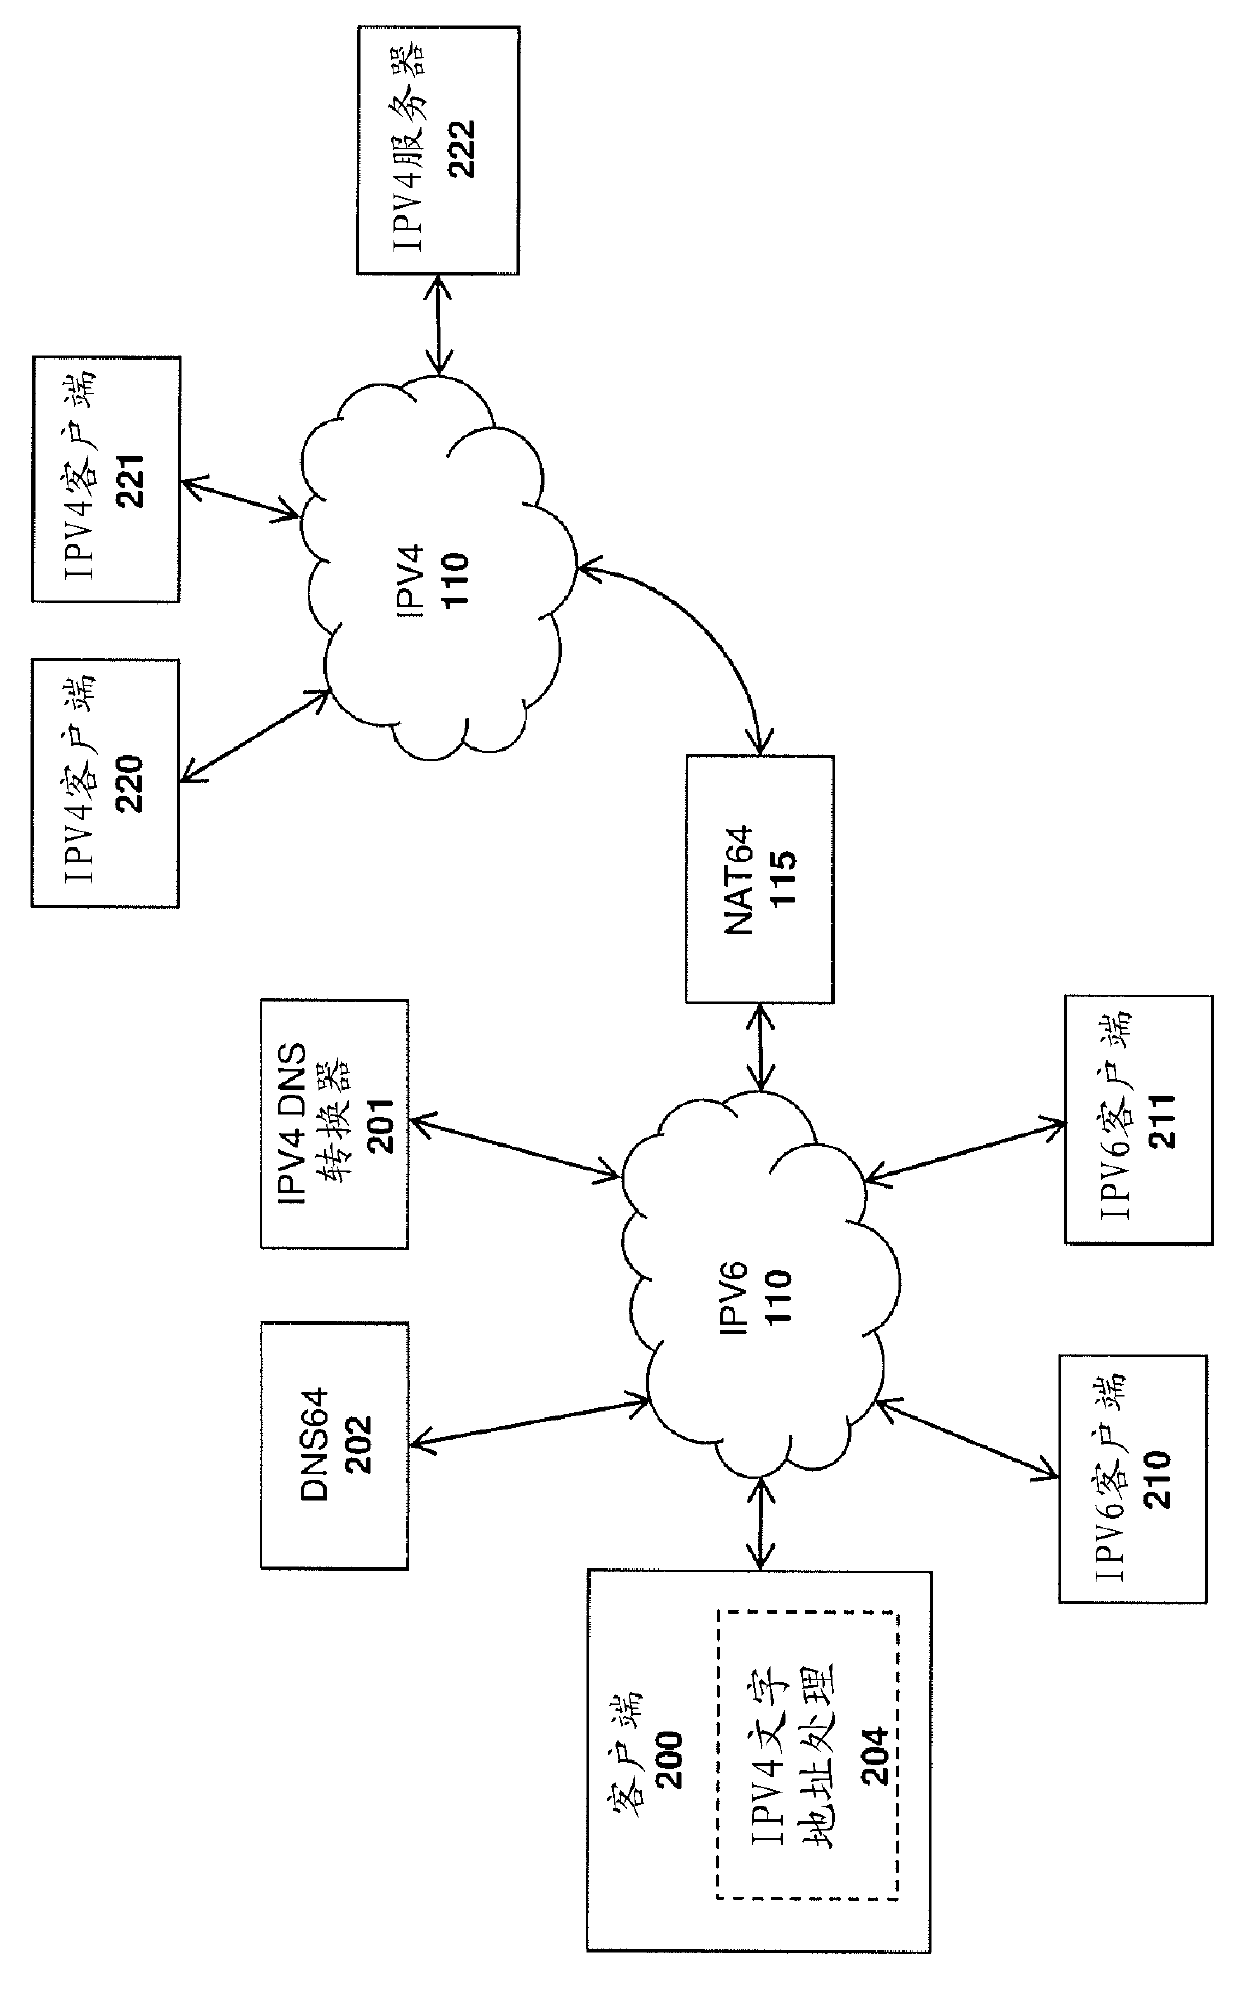 System and method for translating network addresses